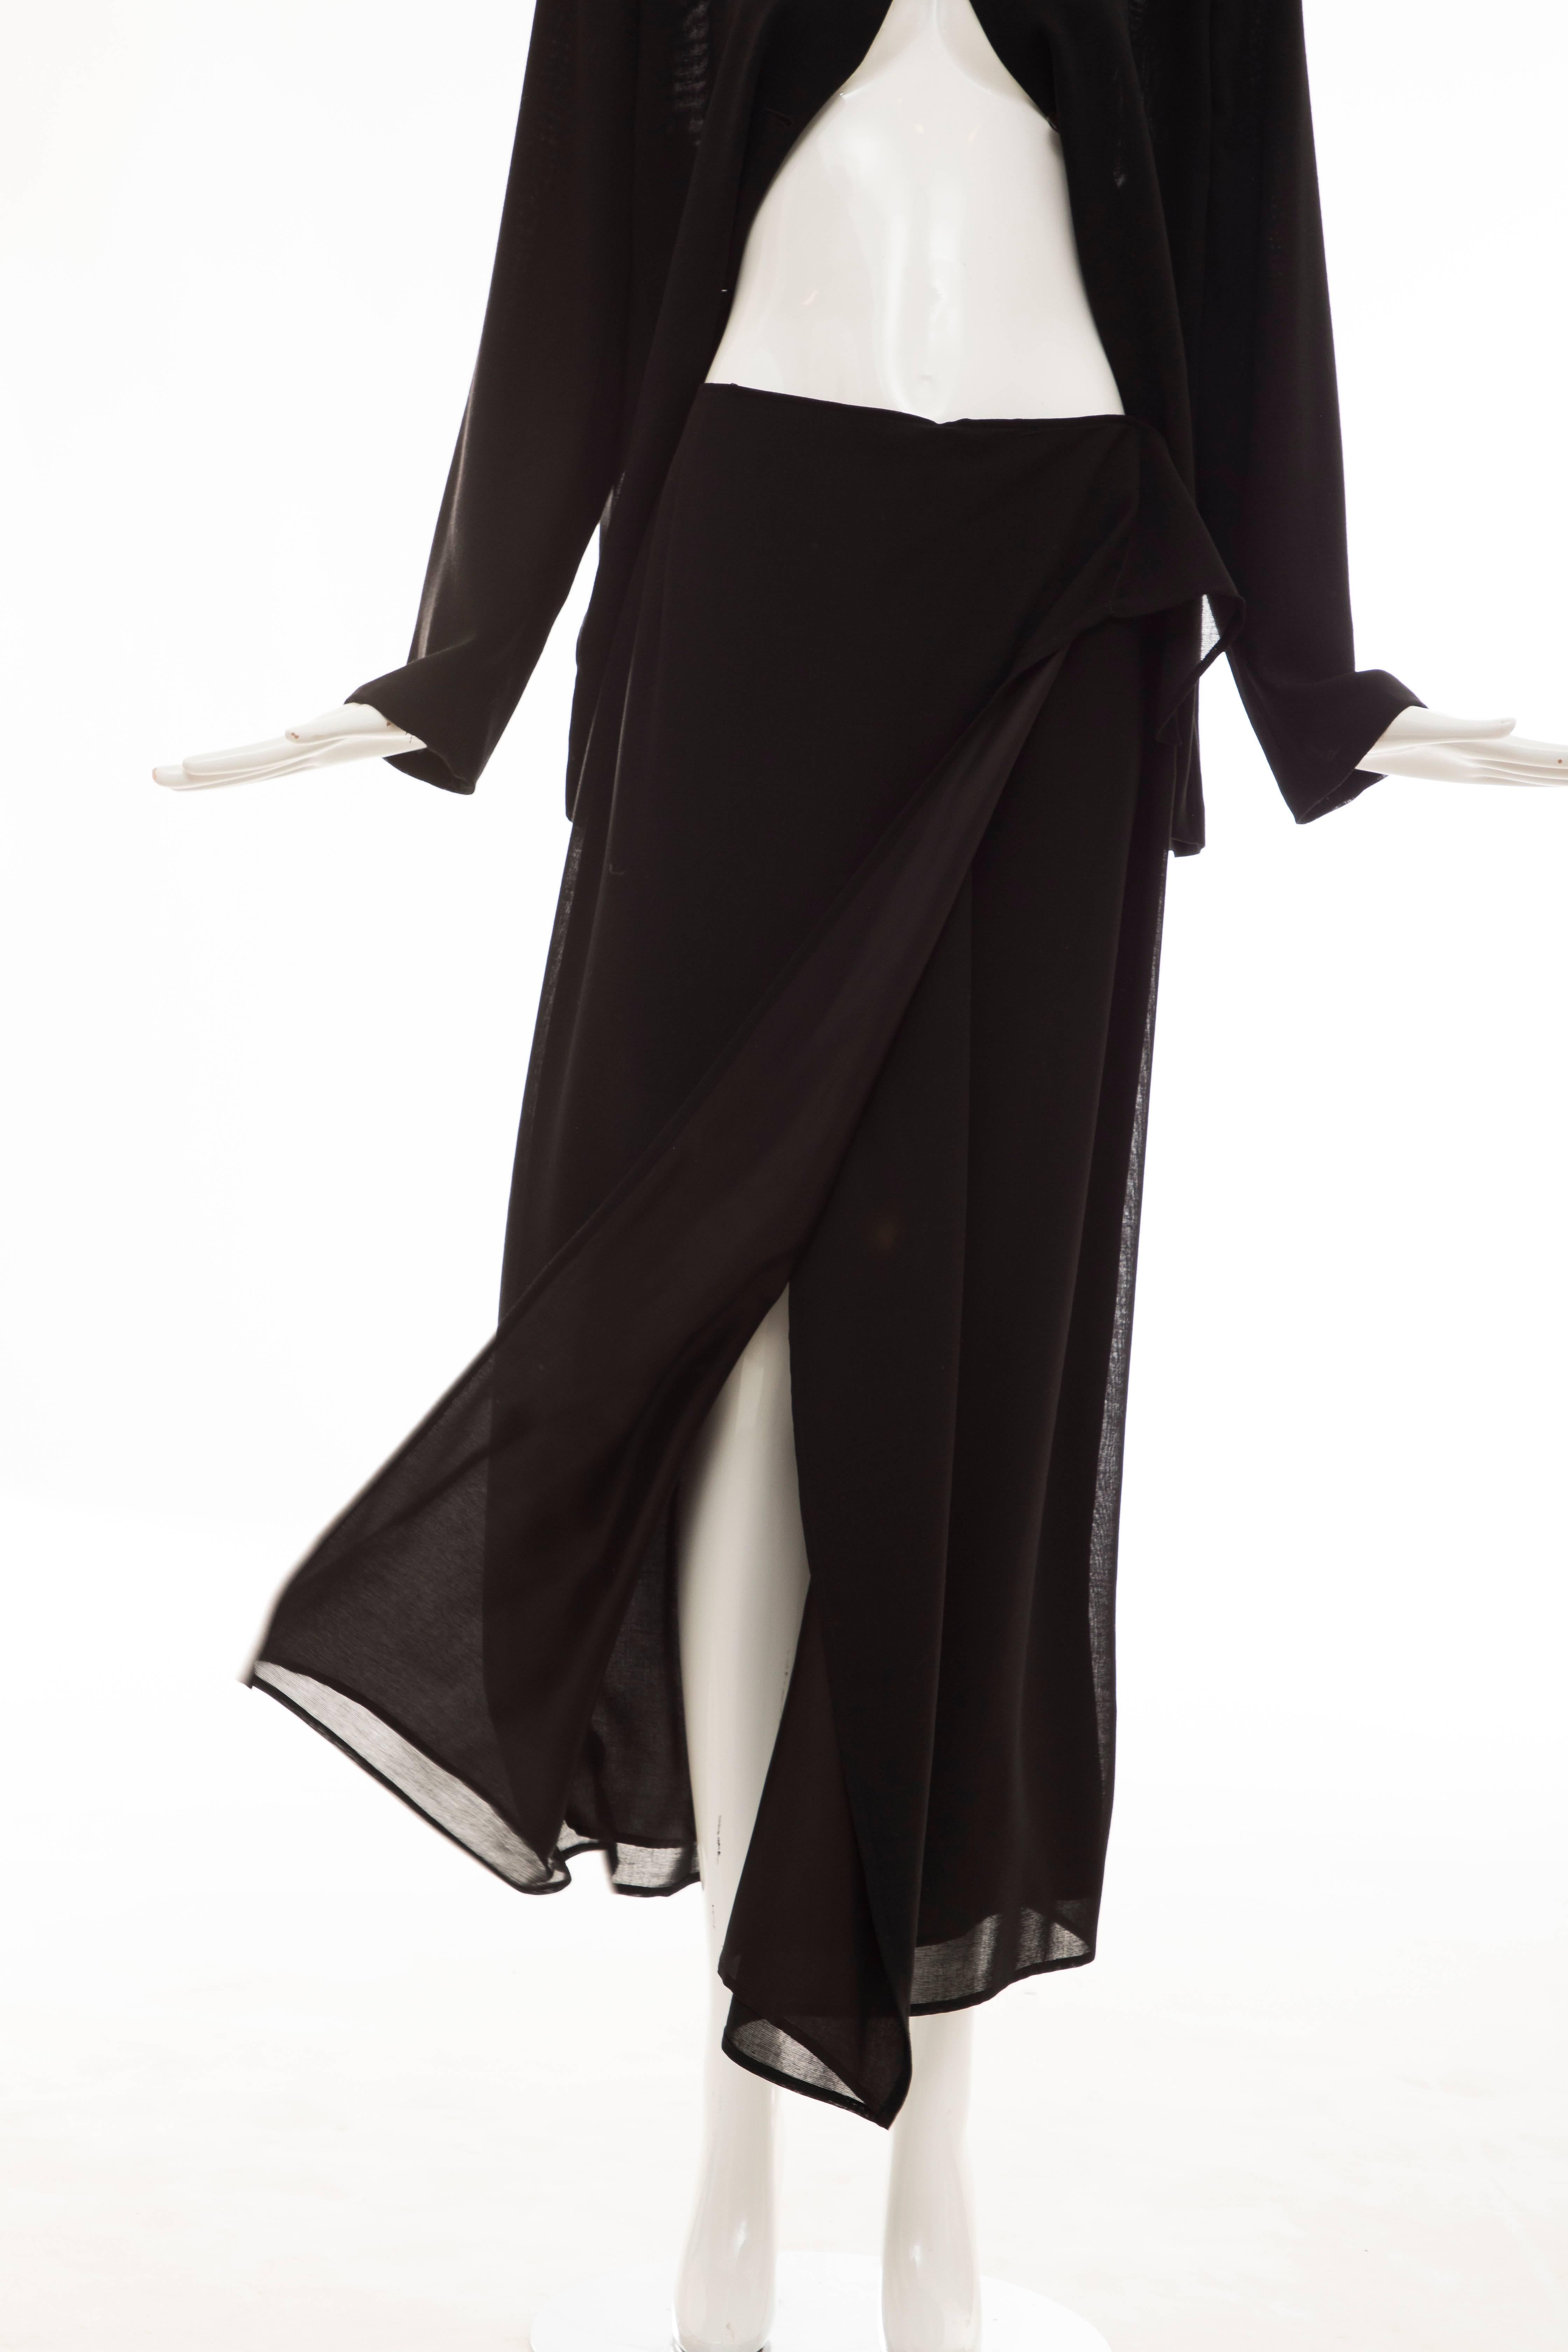 Cerruti 1881 Black Lightweight Wool Gauze Skirt-Suit, Circa 1990's For Sale 7